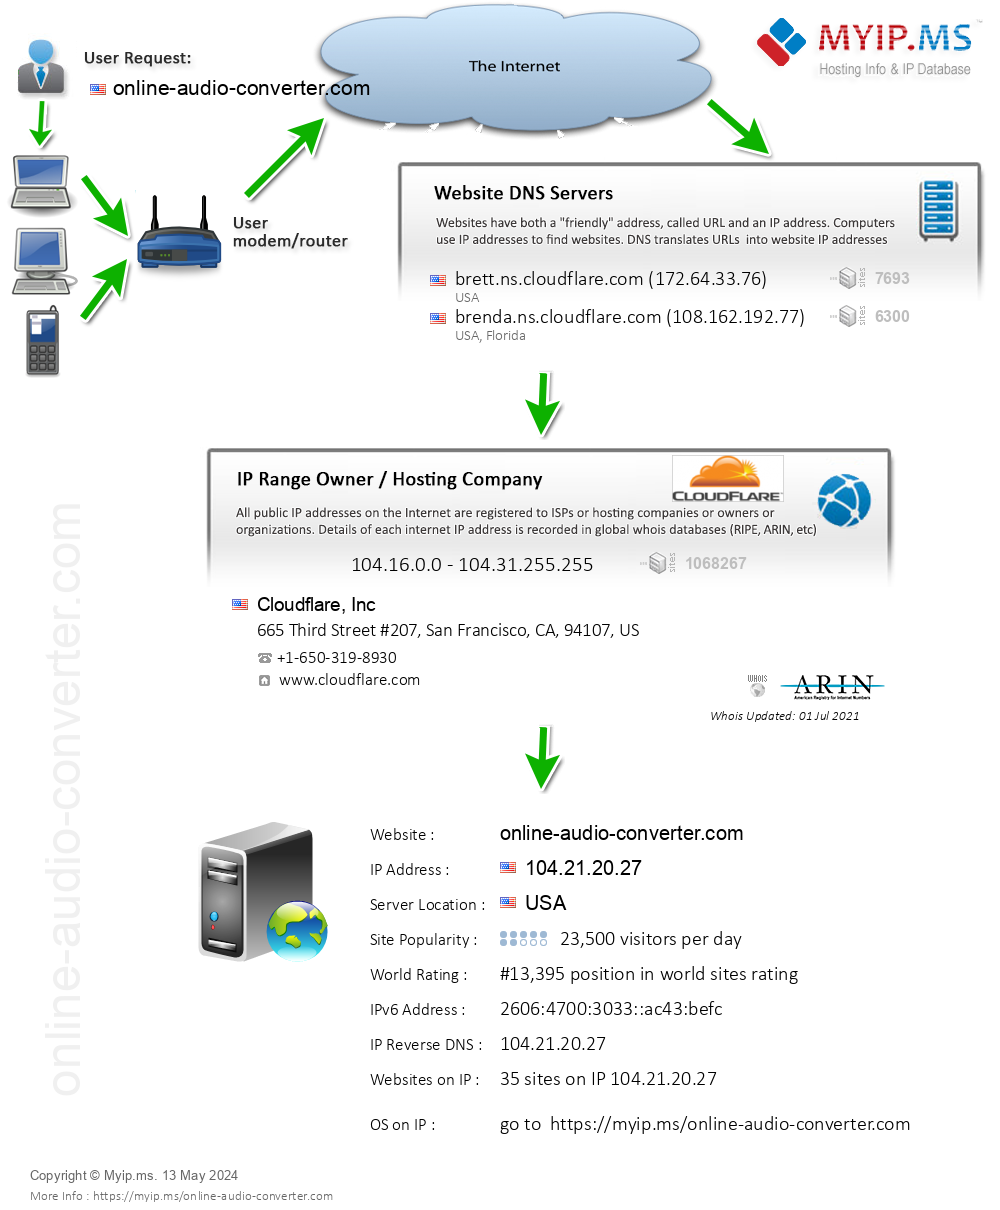 Online-audio-converter.com - Website Hosting Visual IP Diagram